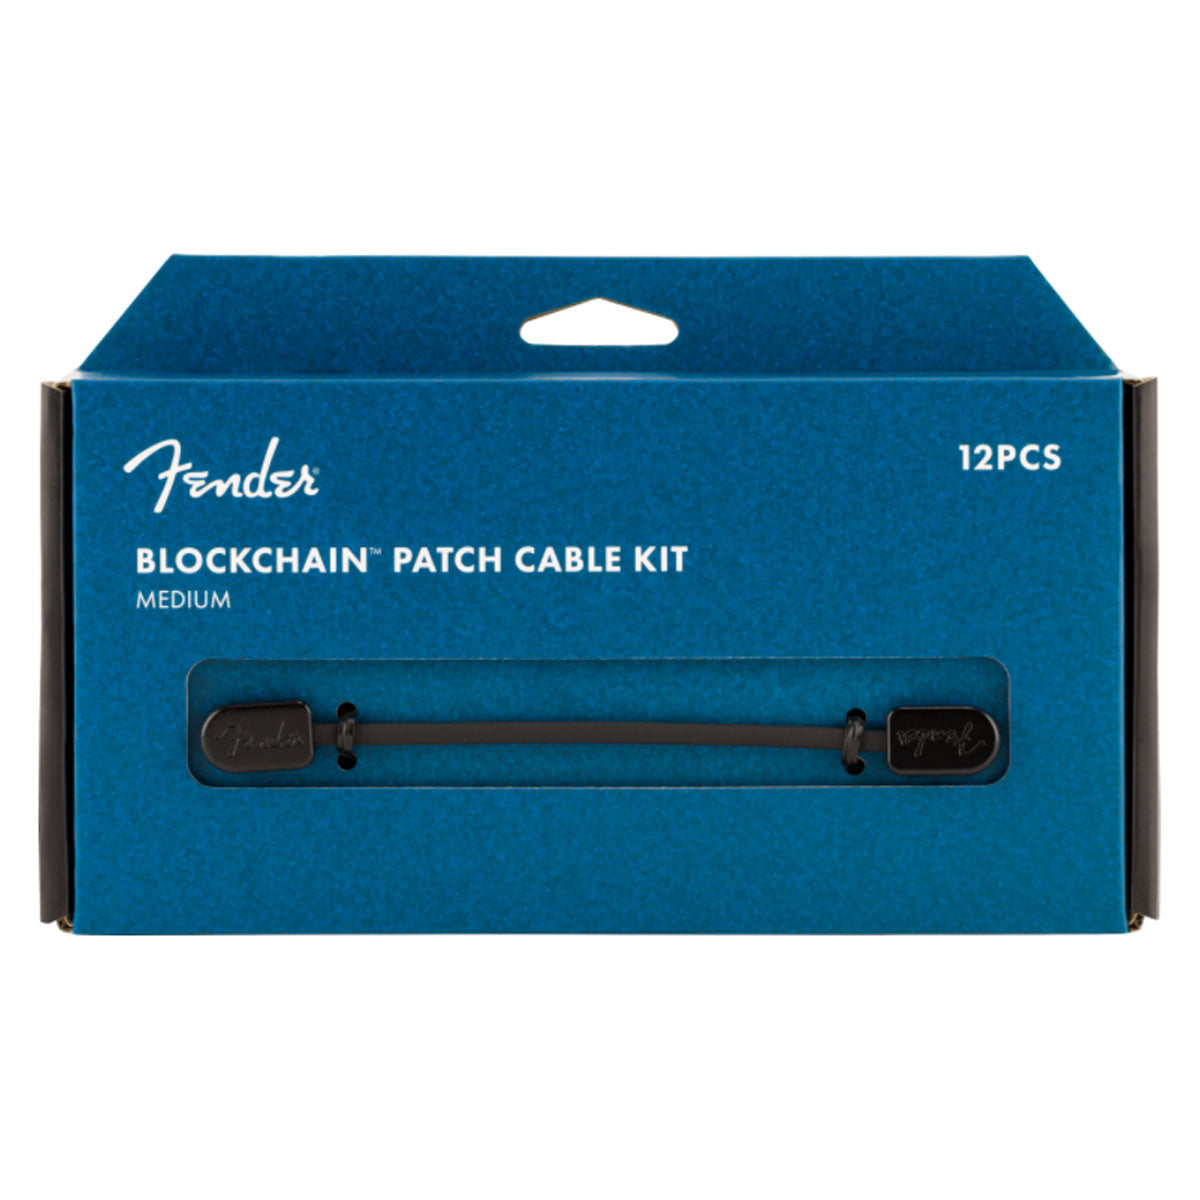 Fender Blockchain Patch Cable Kit Black Medium - 0990825302